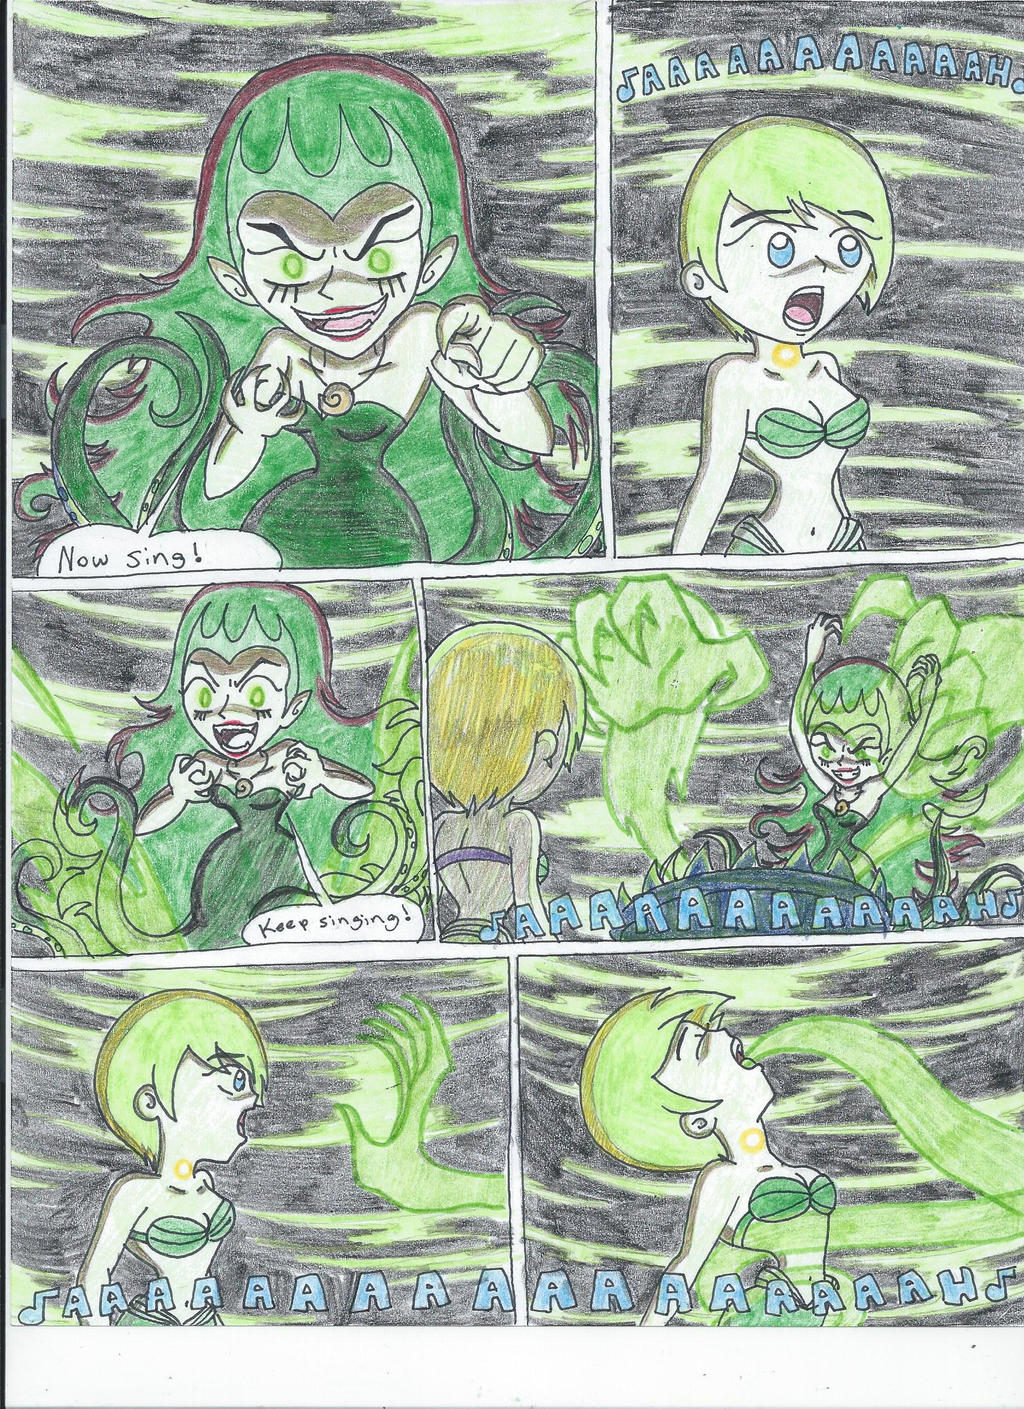 The Little Mermaid rp scene pg. 6 (last page) by 